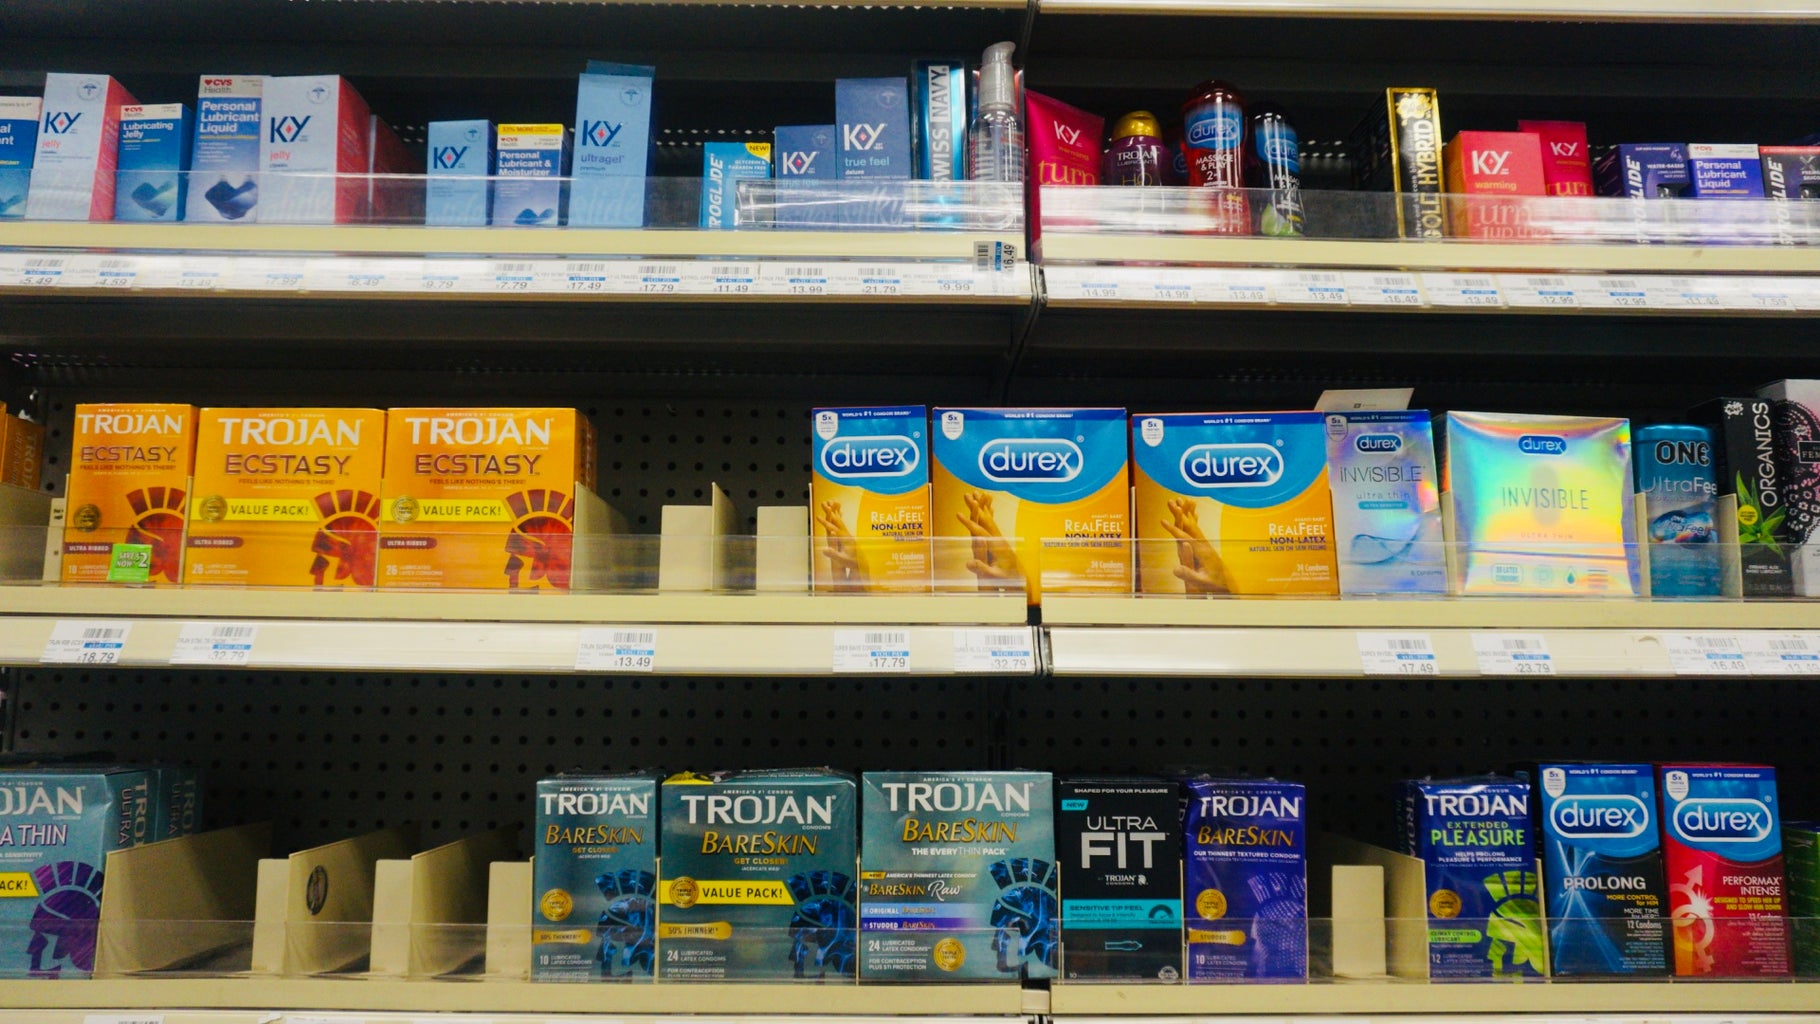 sexual health: durex and trojan condoms